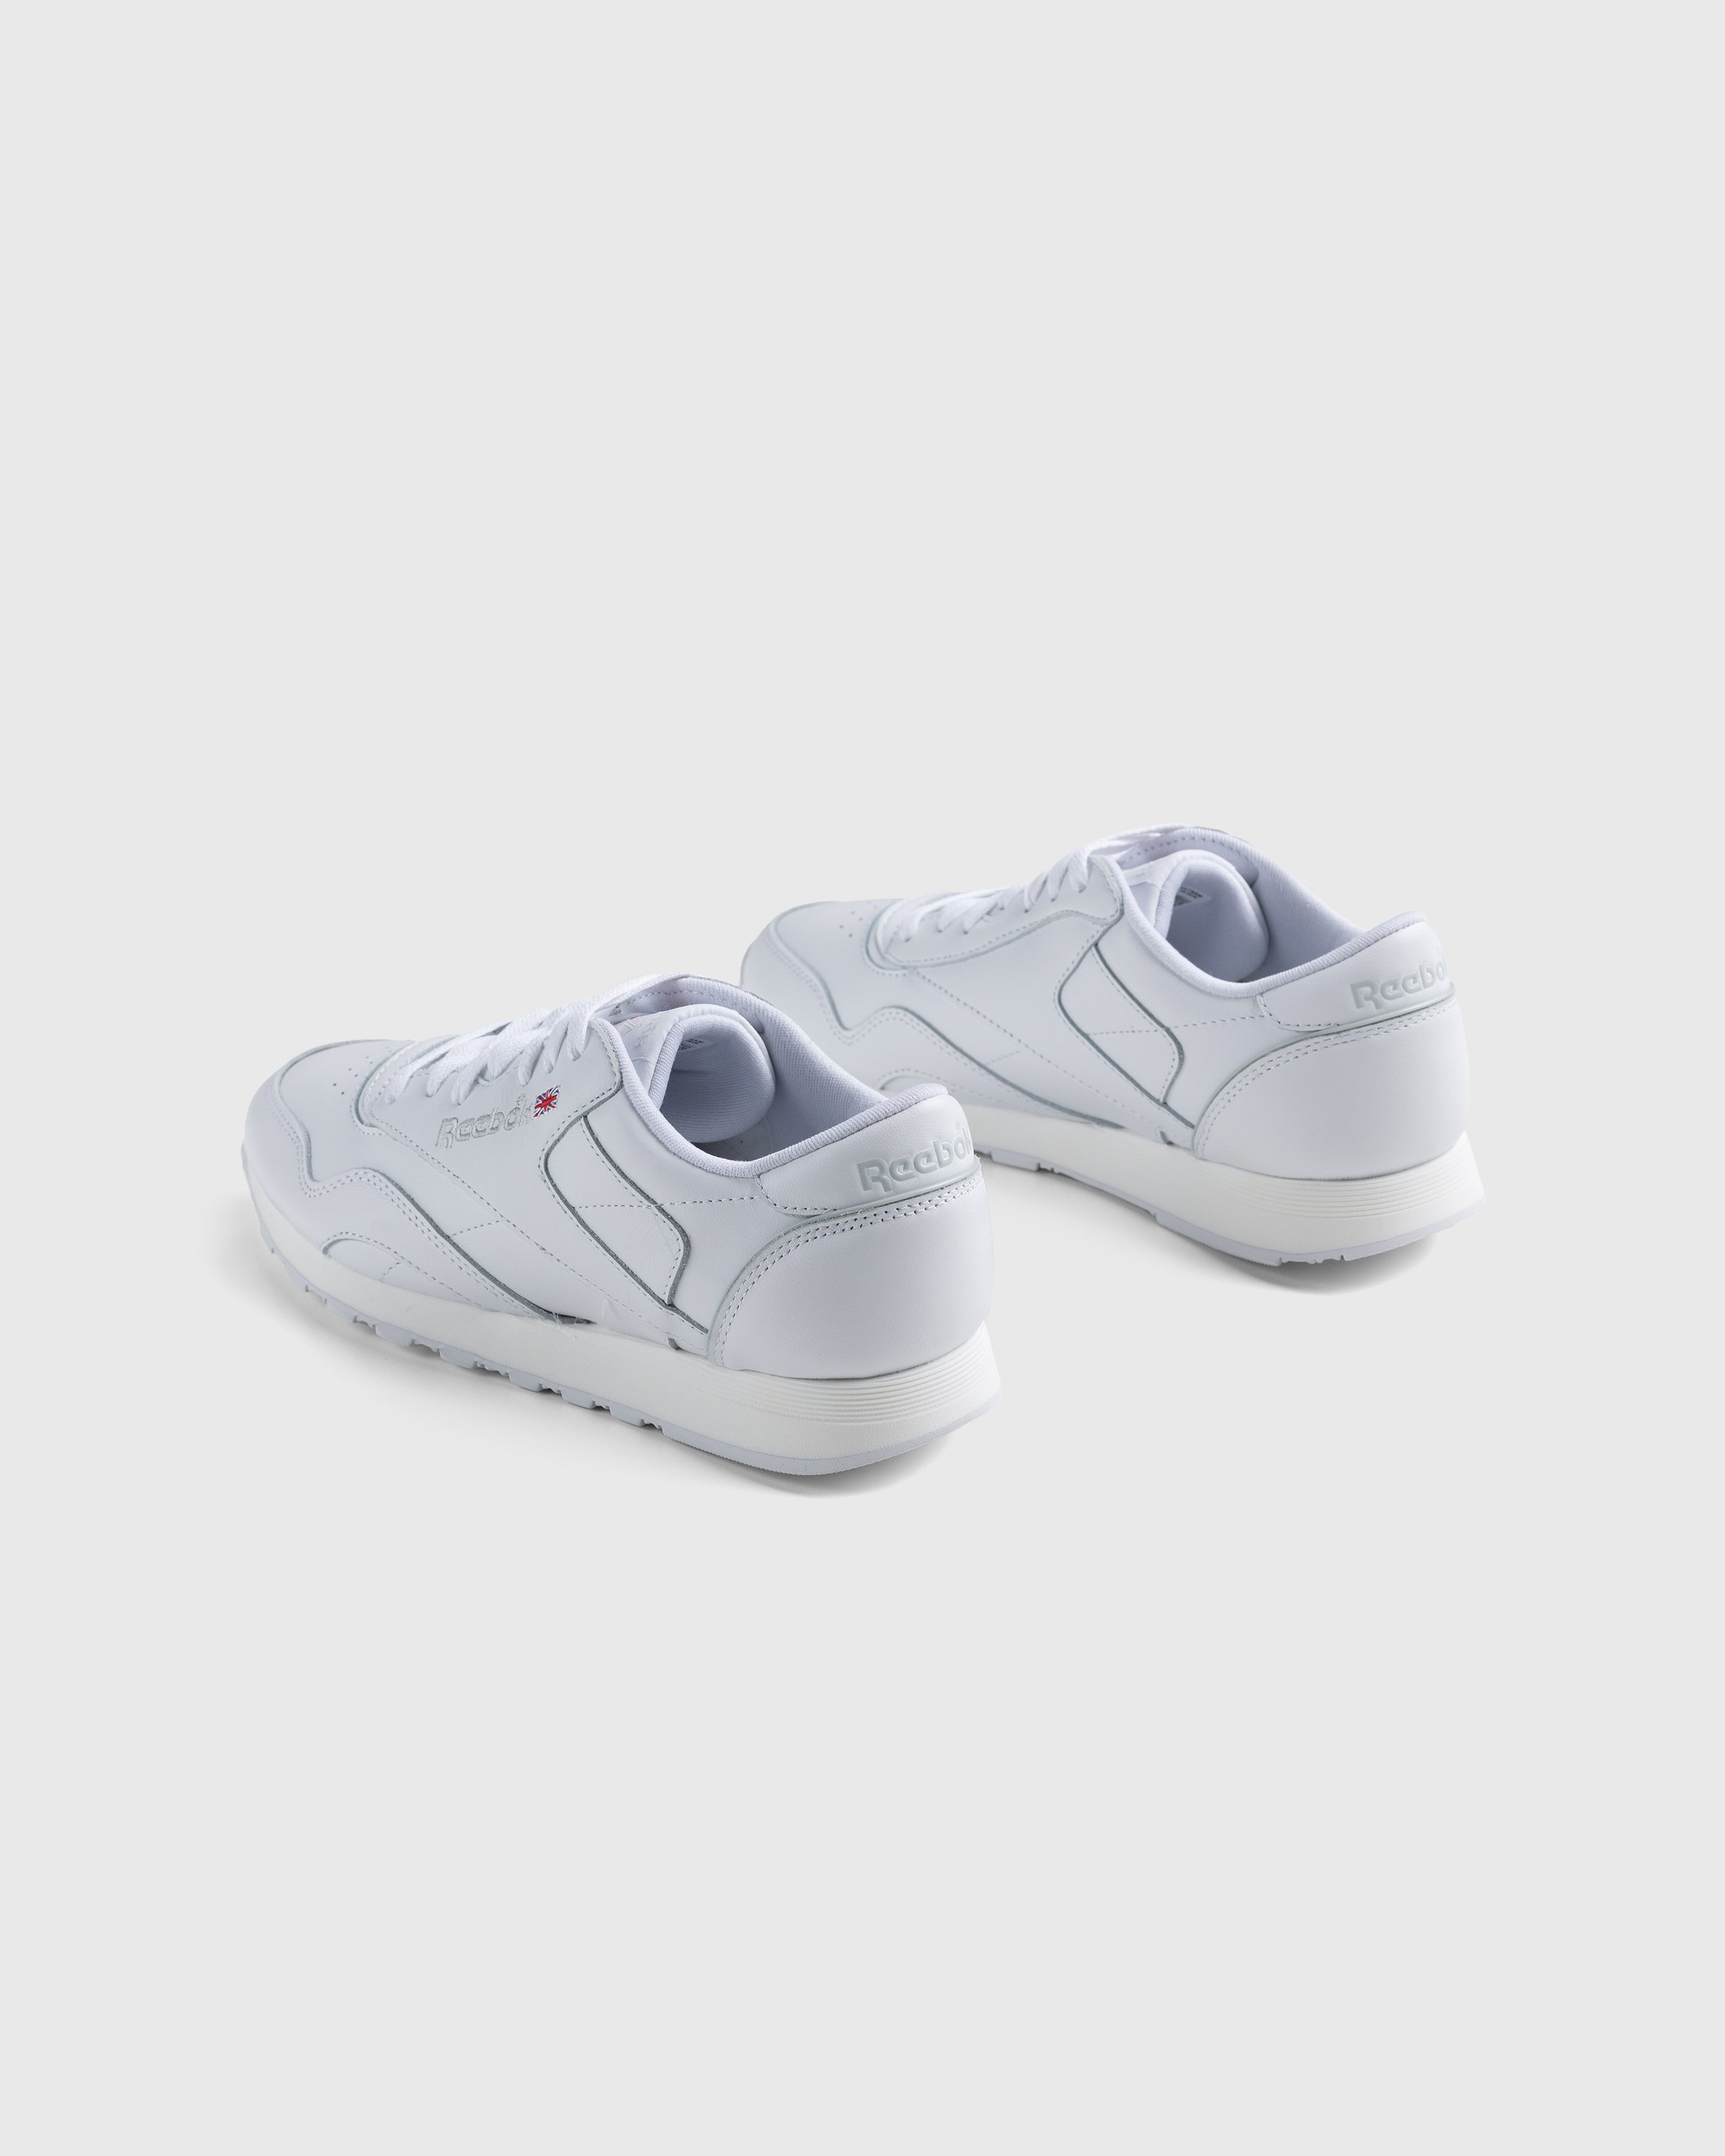 Reebok - Classic Leather Plus White - Footwear - White - Image 3